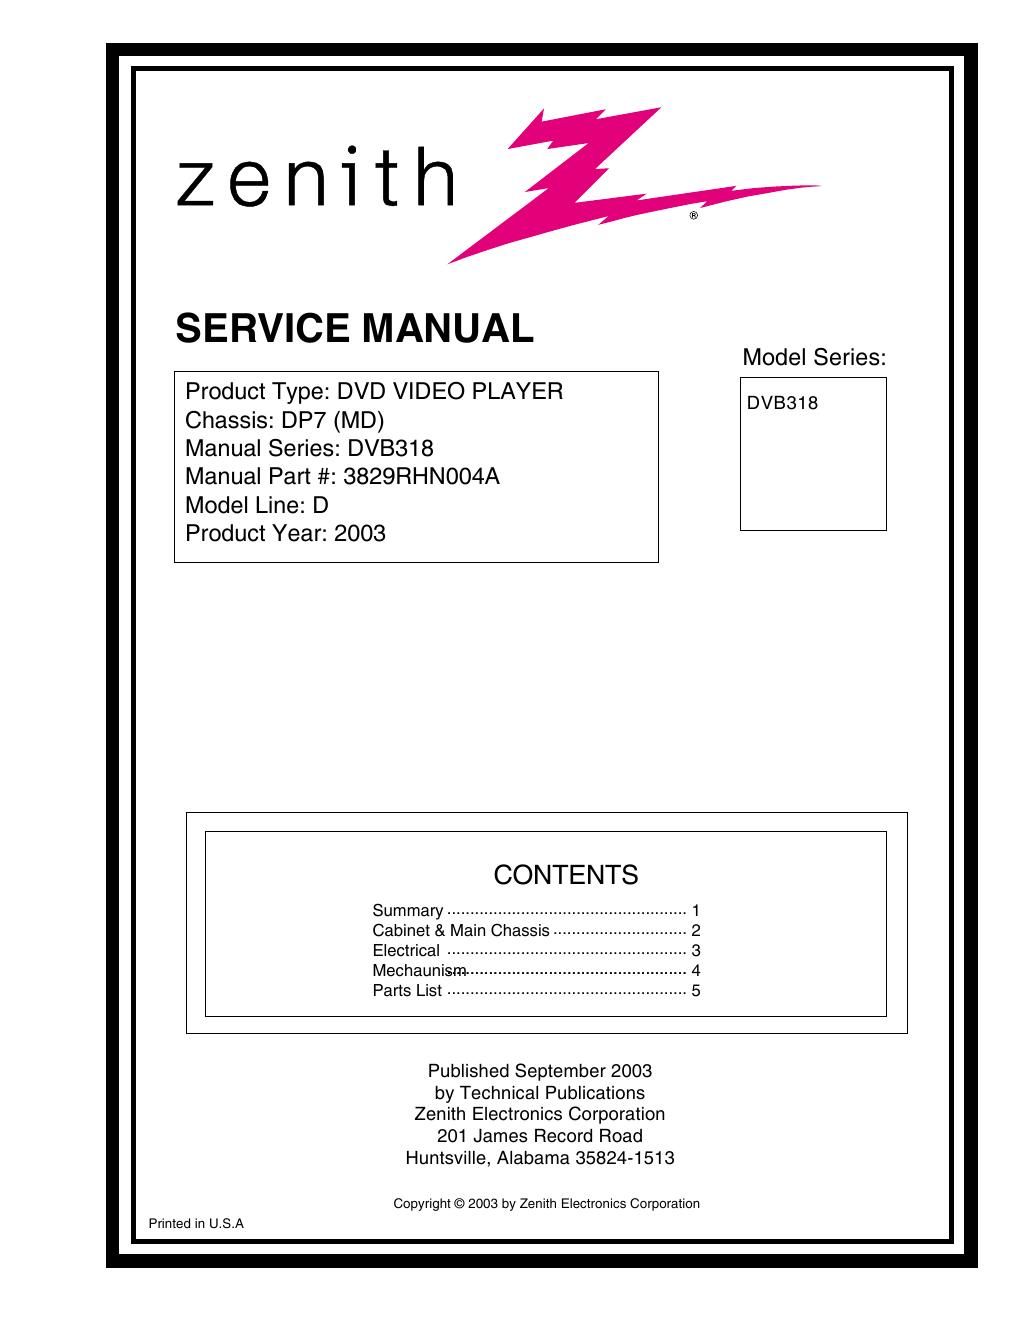 zenith dvb 318 service manual